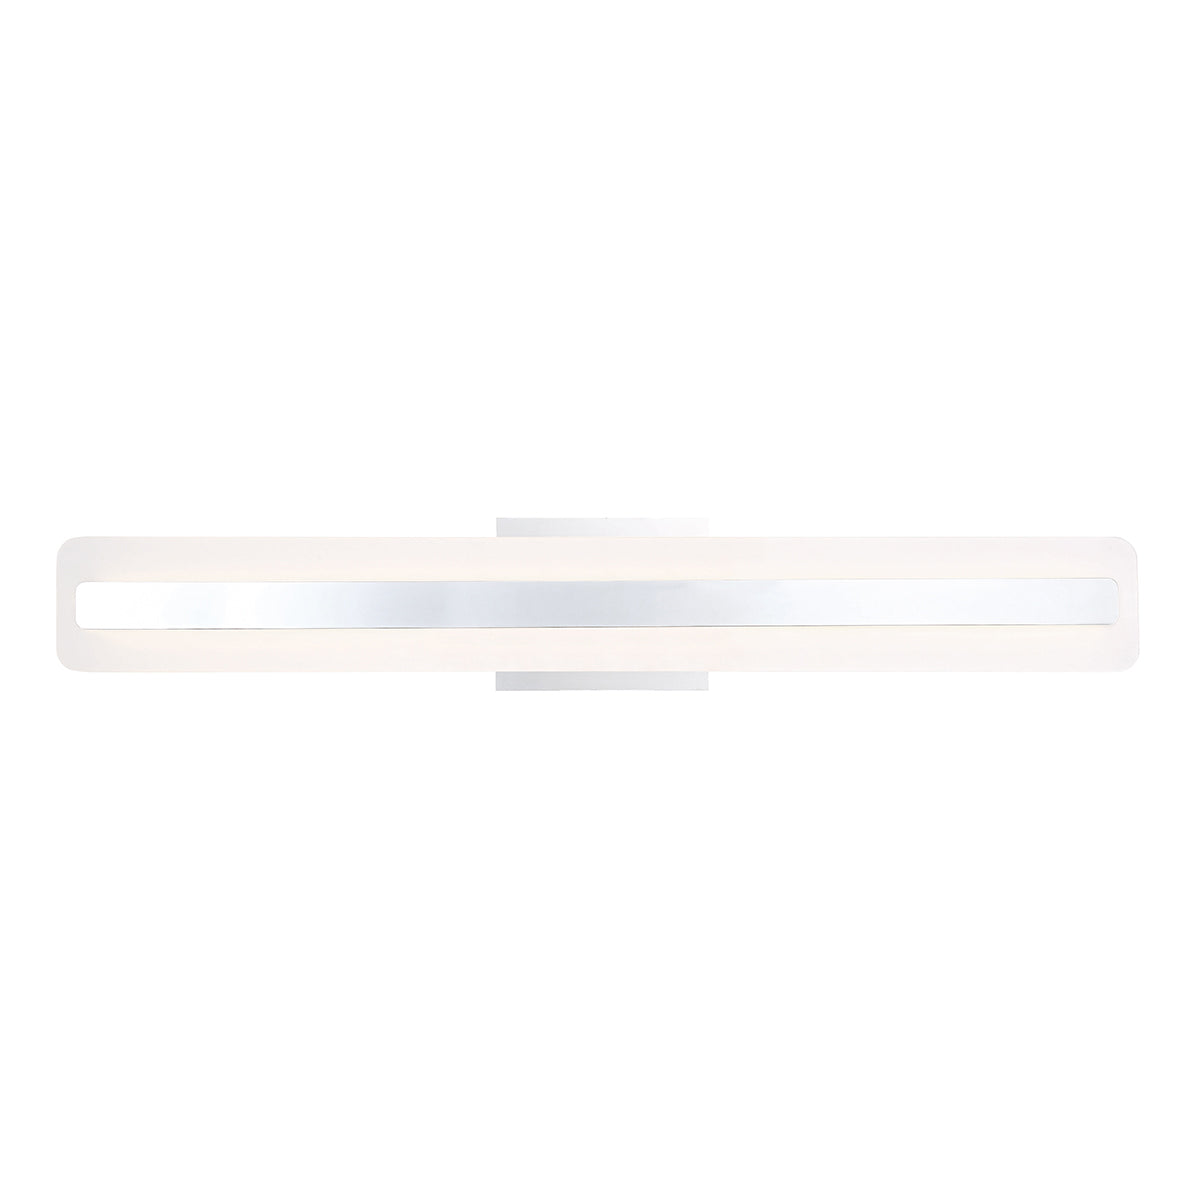 SAVONA Bathroom sconce Chrome - 31812-016 INTEGRATED LED | EUROFASE